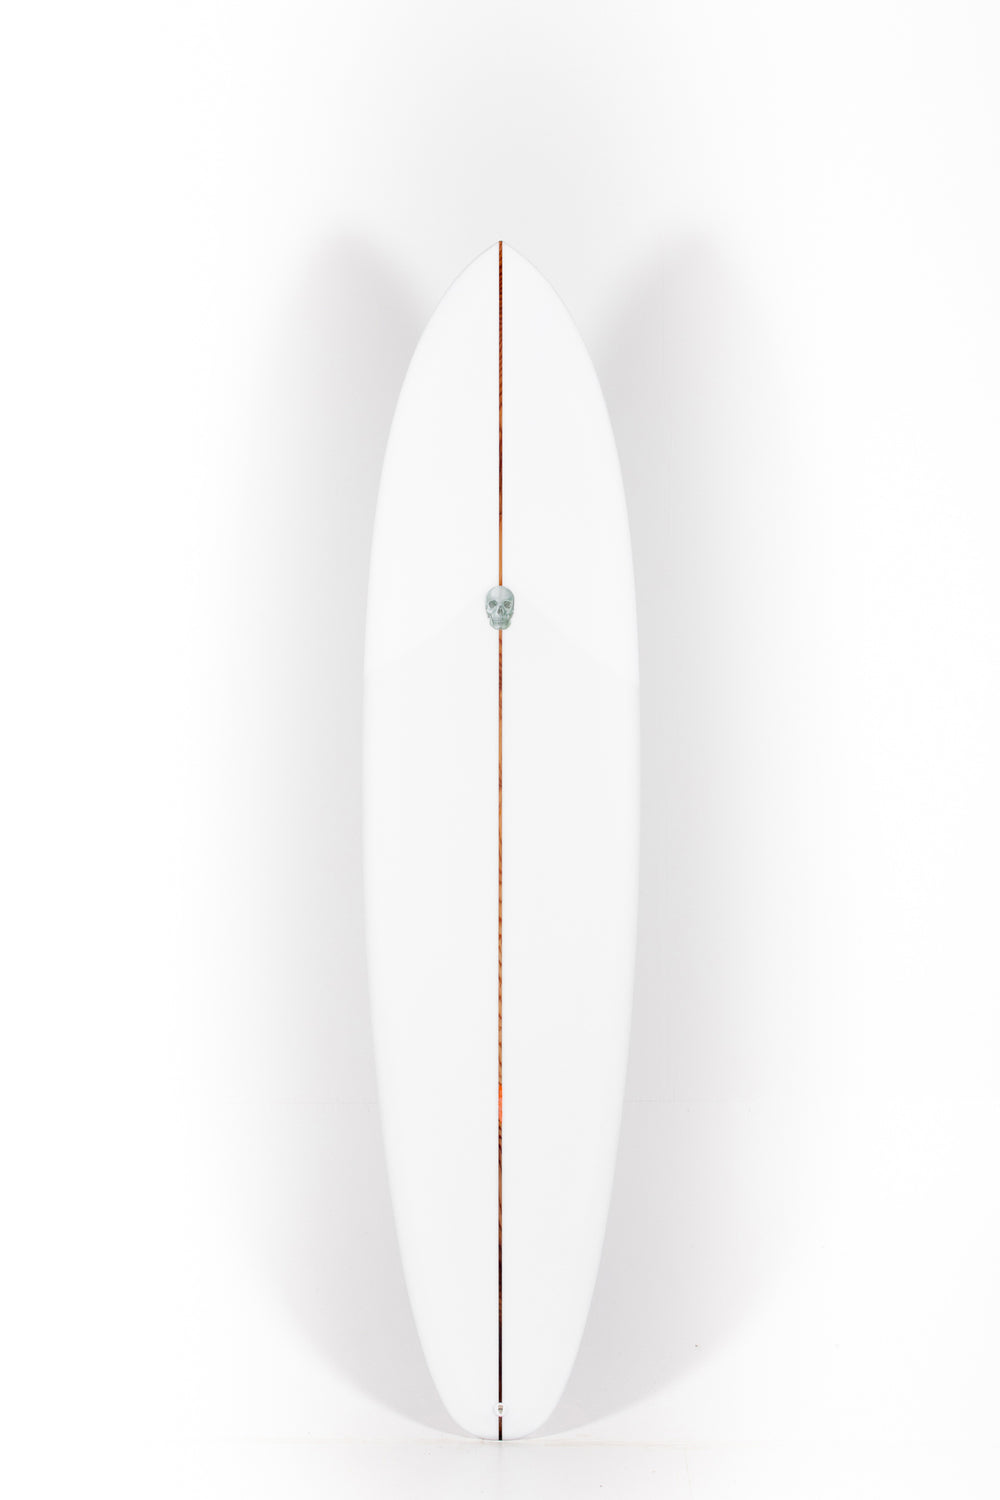 Pukas Surf Shop - Christenson Surfboards - TWIN TRACKER - 7'6